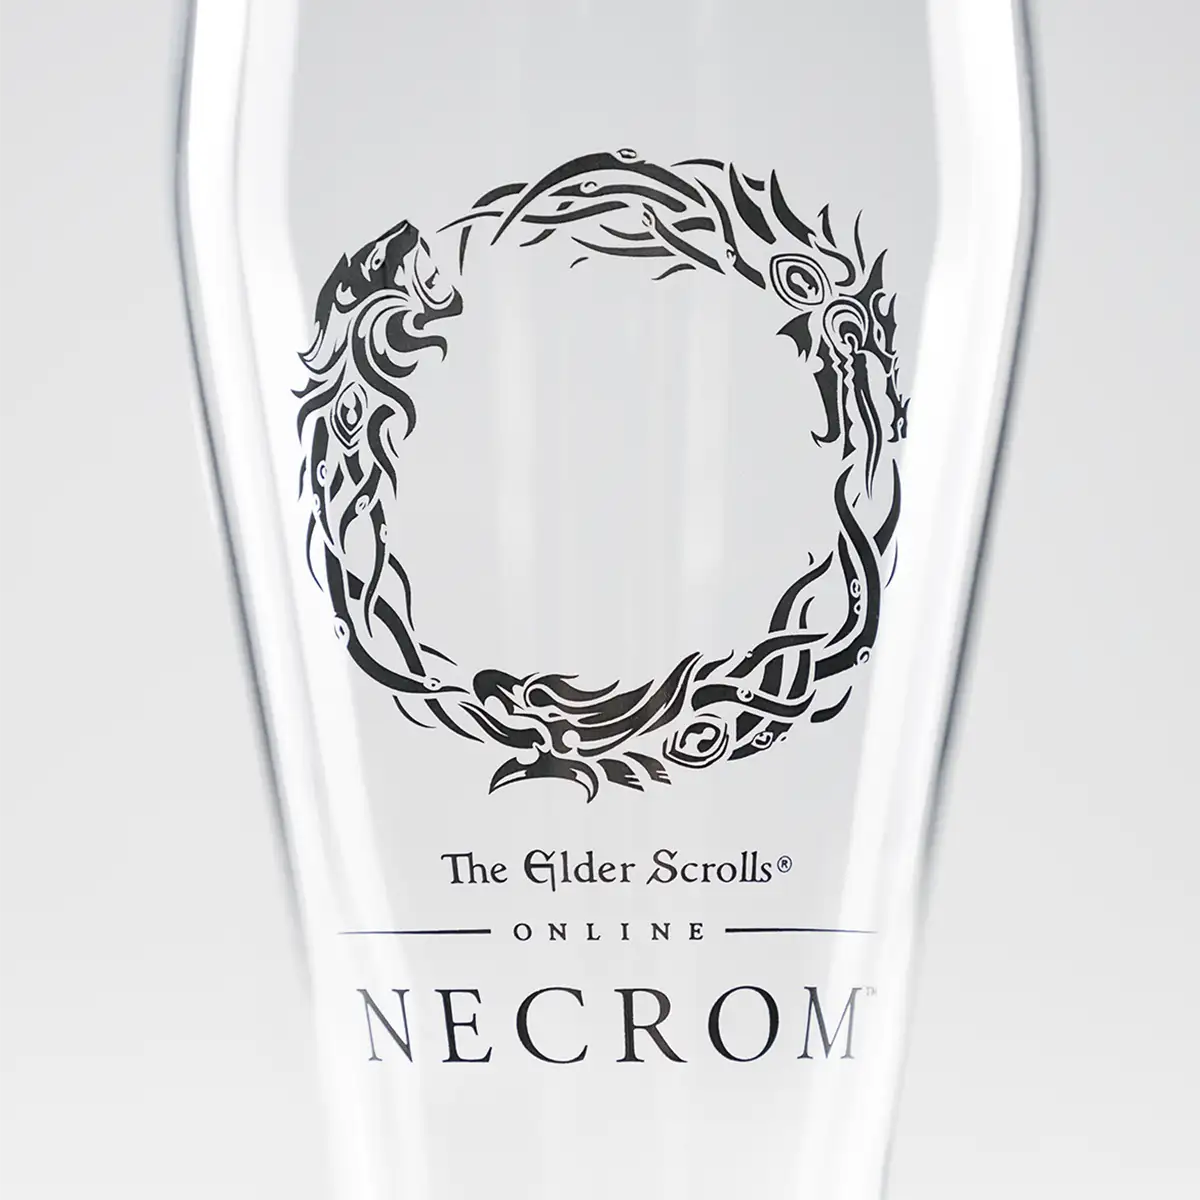 The Elder Scrolls Online Pint Glass "Necrom" Image 2